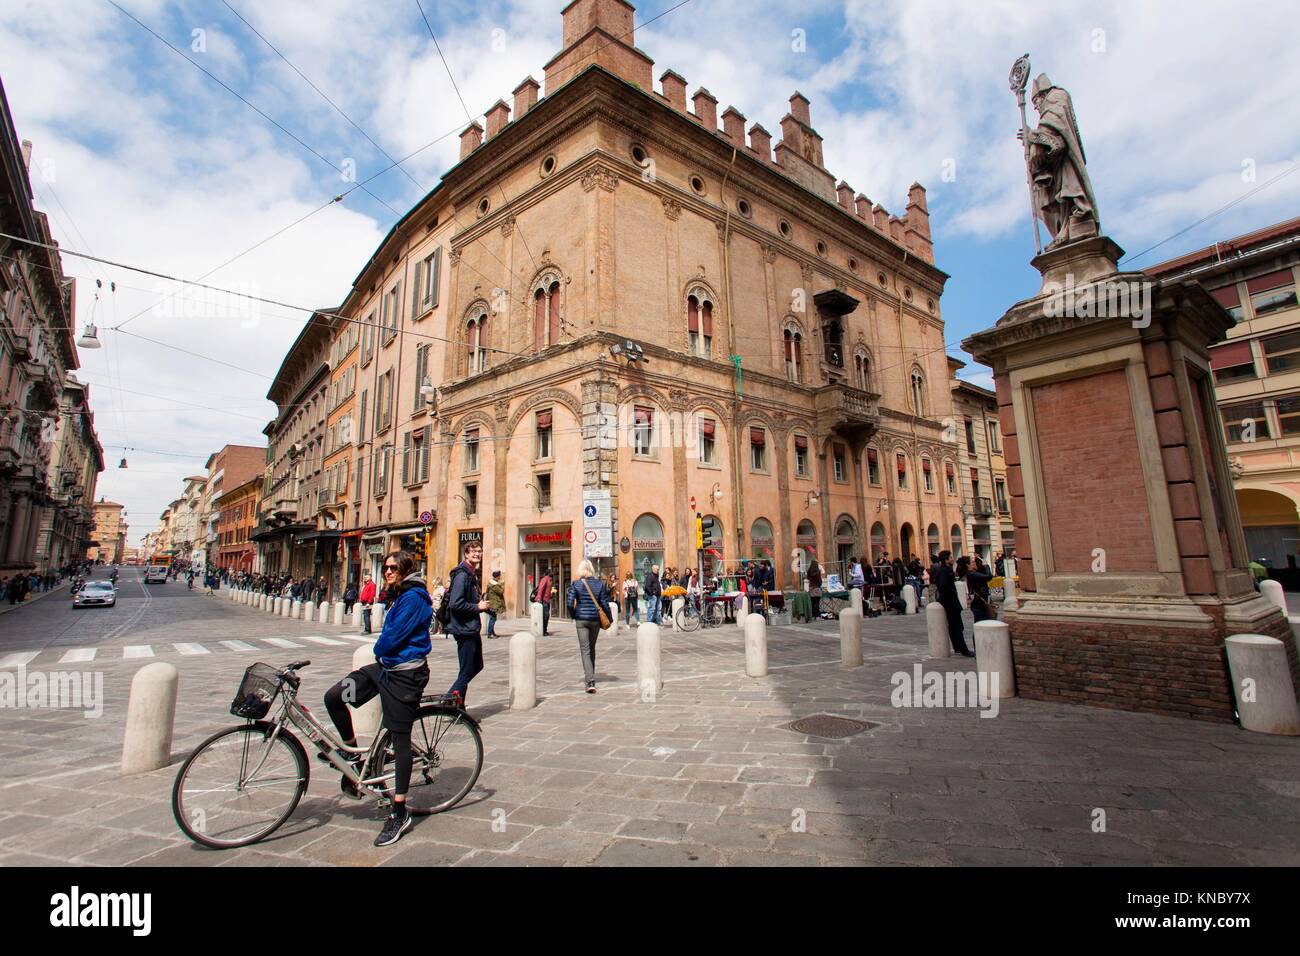 Piazza di porta ravegnana fotografías e imágenes de alta resolución - Alamy